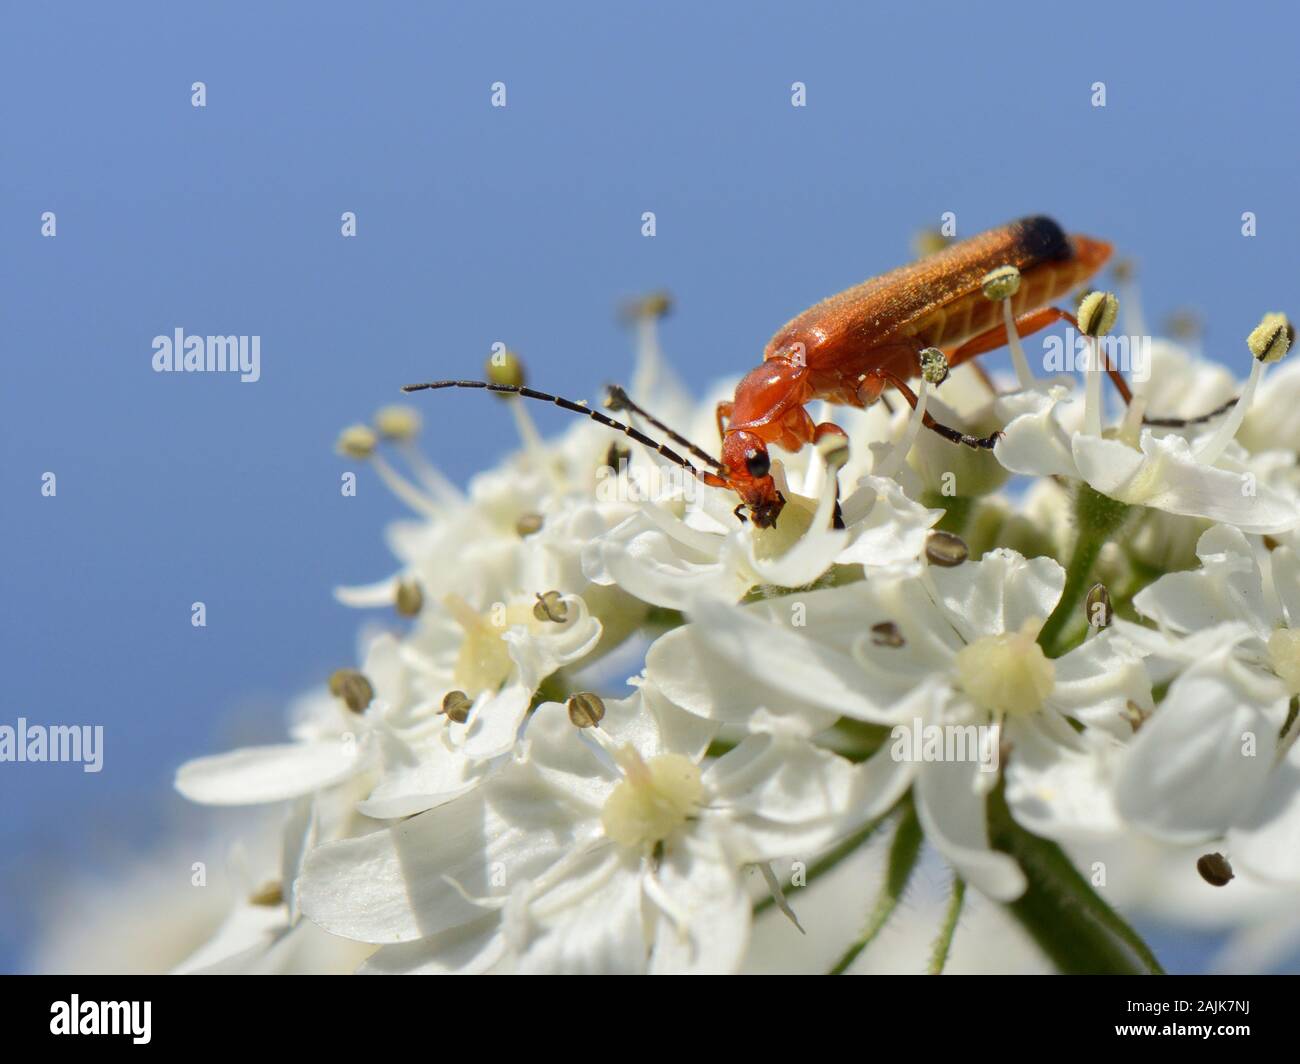 Comune soldato rosso beetle / nero-soldato punta beetle (Rhagonycha fulva) alimentazione nettare su comuni hogweed fiori (Heracleum sphondylium), UK. Foto Stock